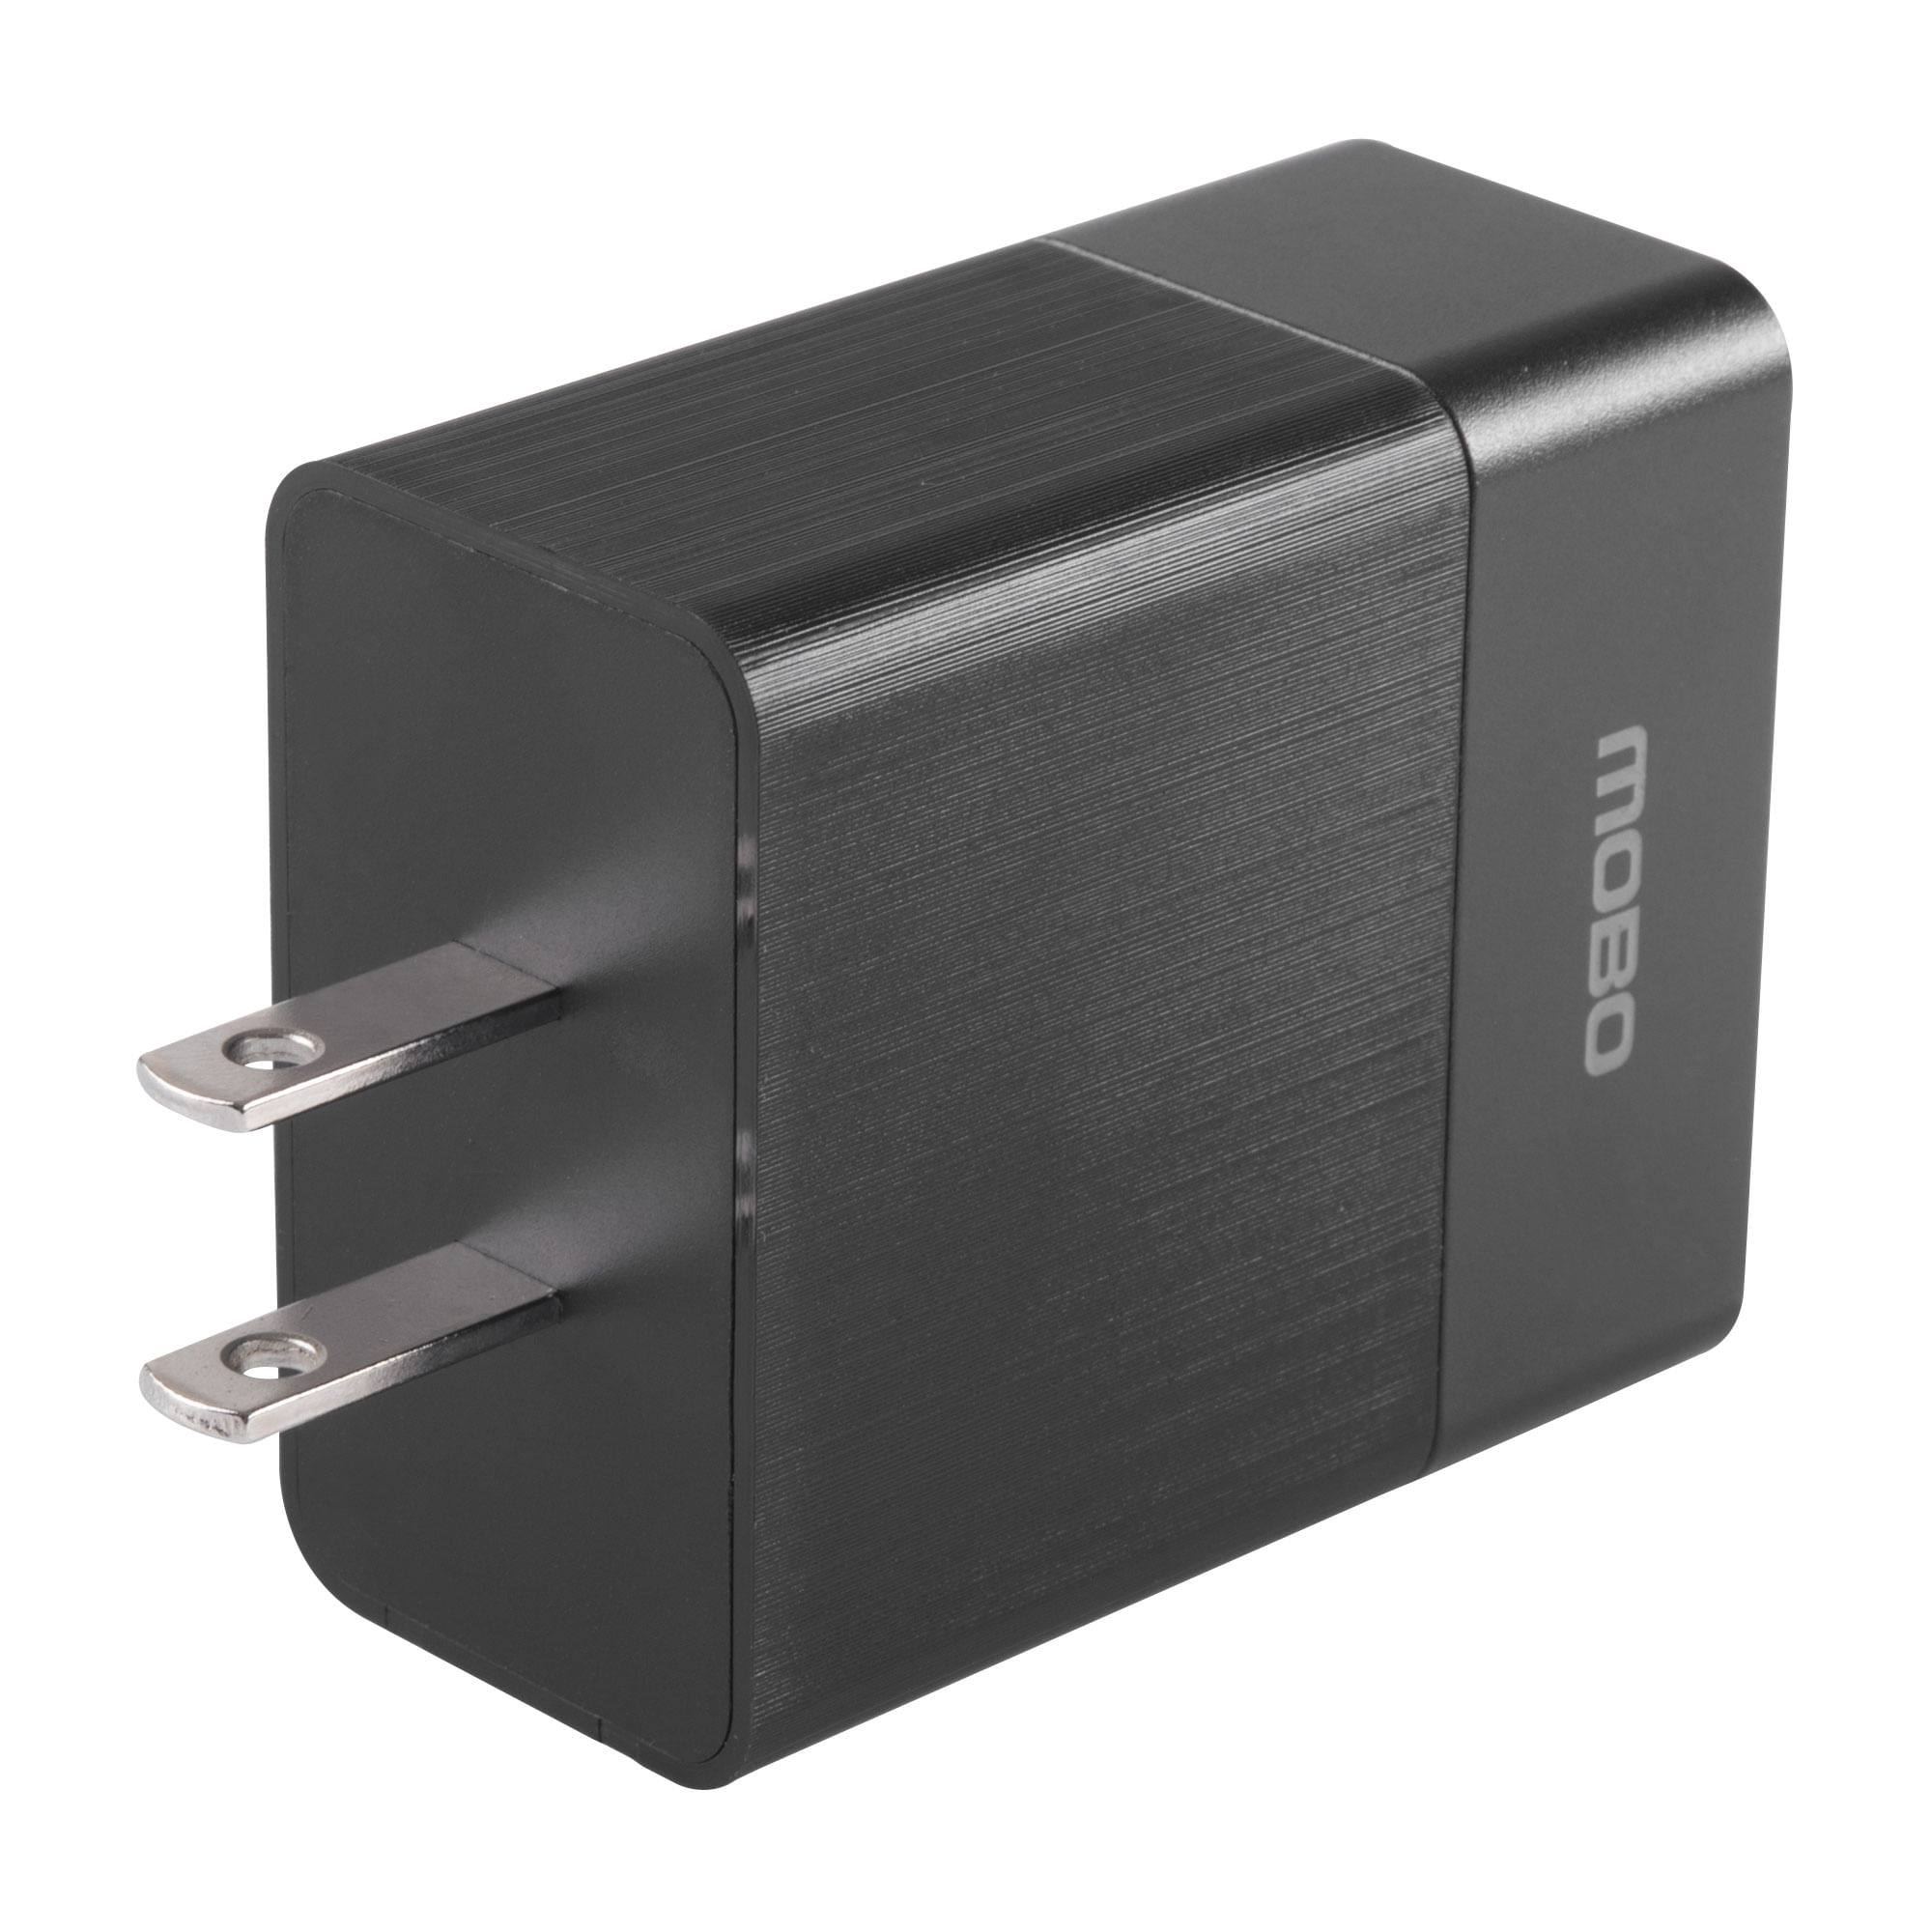 Bloque de cargador USB C, paquete de 2 cargadores de pared USB C de doble  puerto de 20 W, bloque de carga rápida tipo C, enchufe de ladrillo para